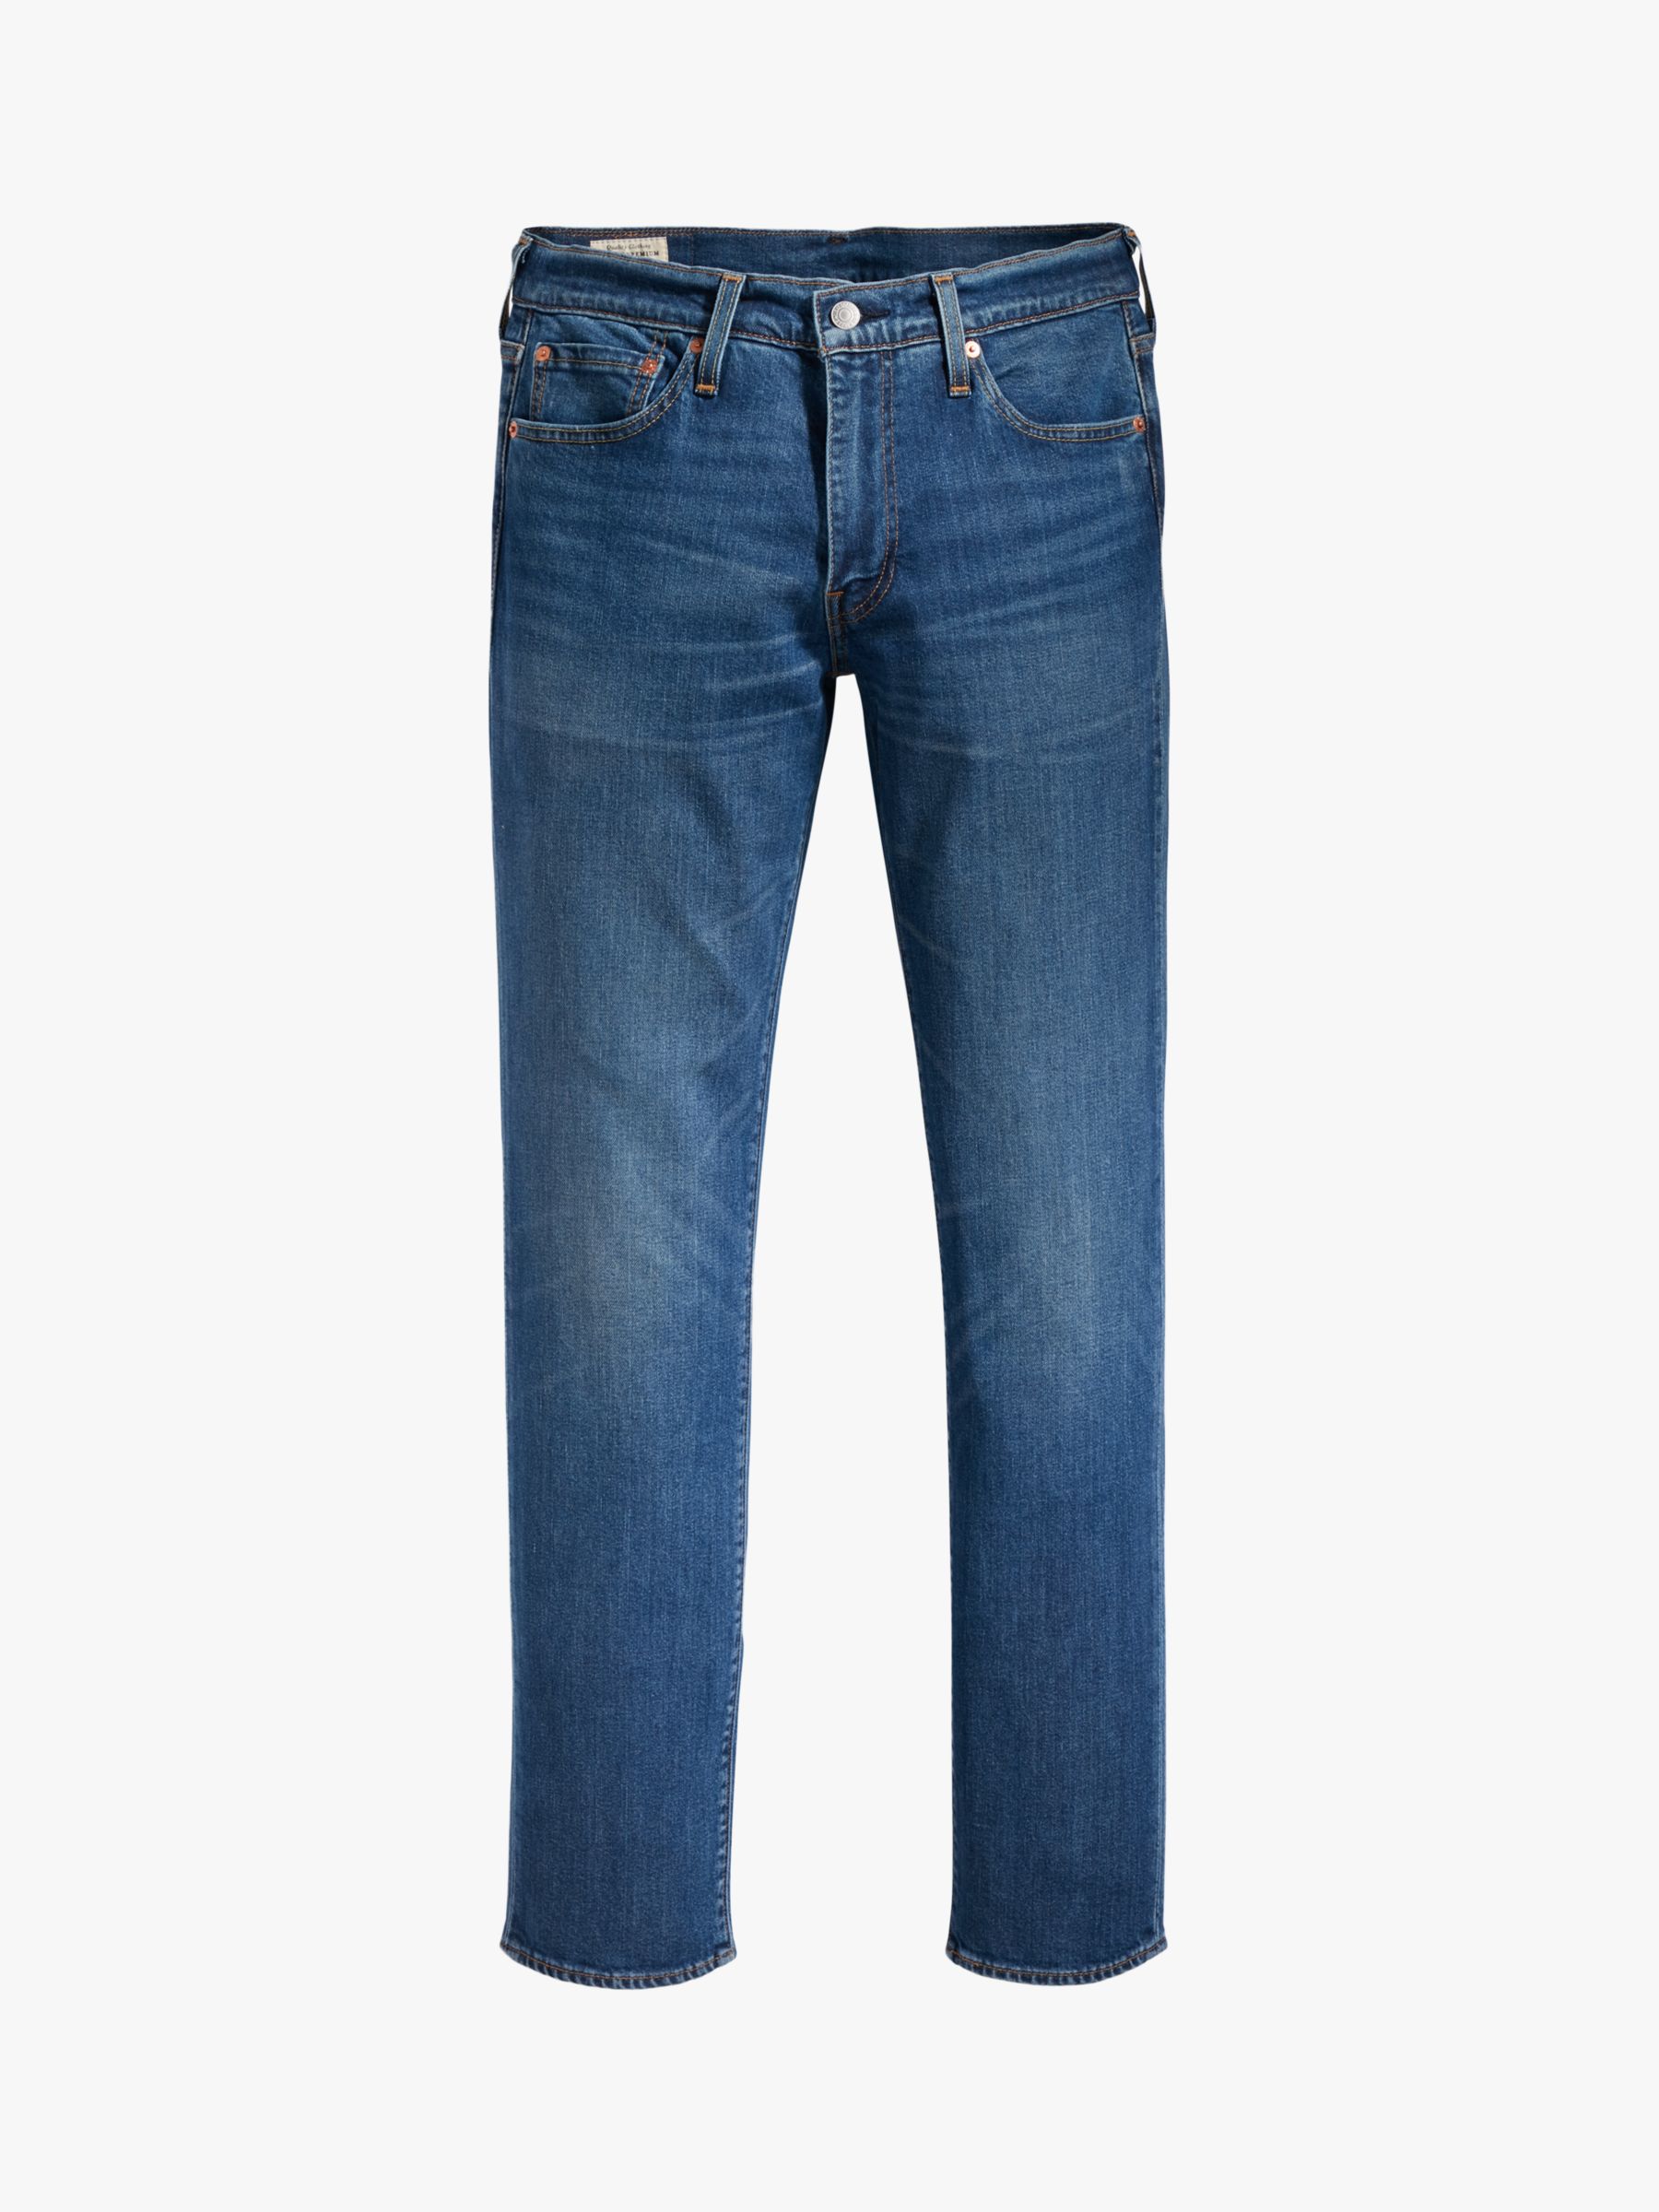 levi's mid blue jeans